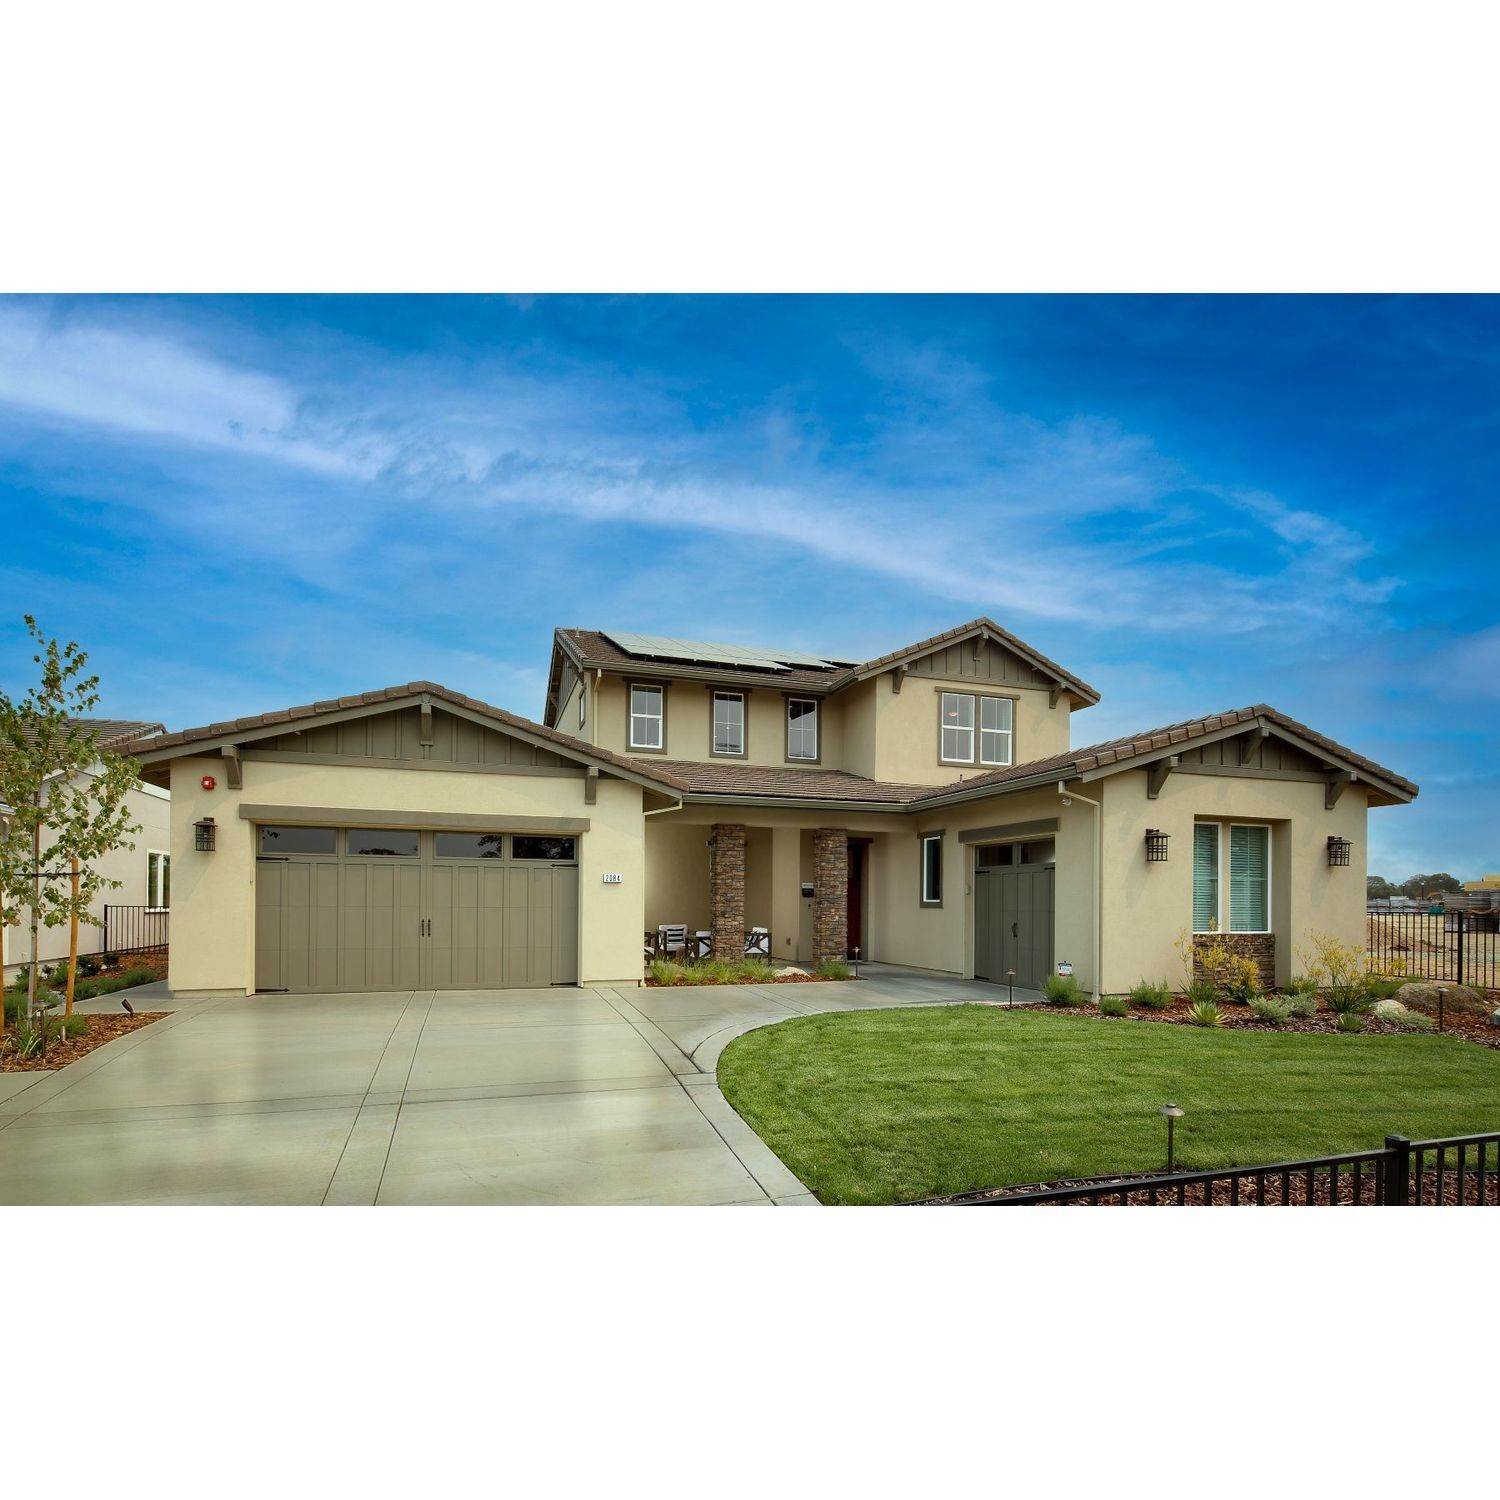 17. Turkey Creek Estates xây dựng tại 2036 Pinehurst Drive, Lincoln, CA 95648